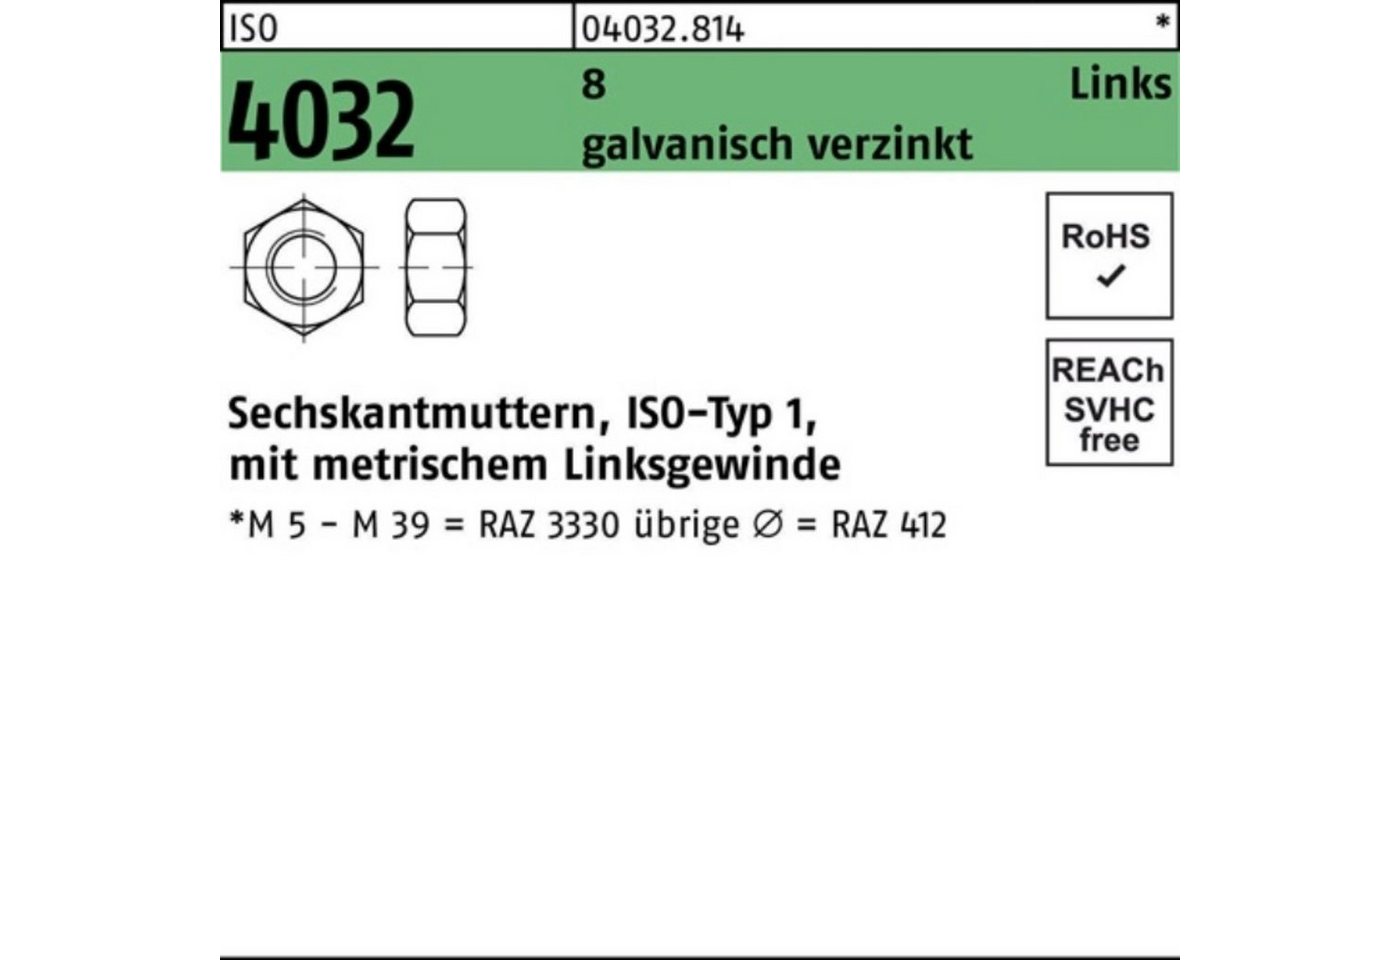 Bufab Muttern 100er Pack Sechskantmutter ISO 4032 links M16 8 galv.verz. 50 Stück I von Bufab